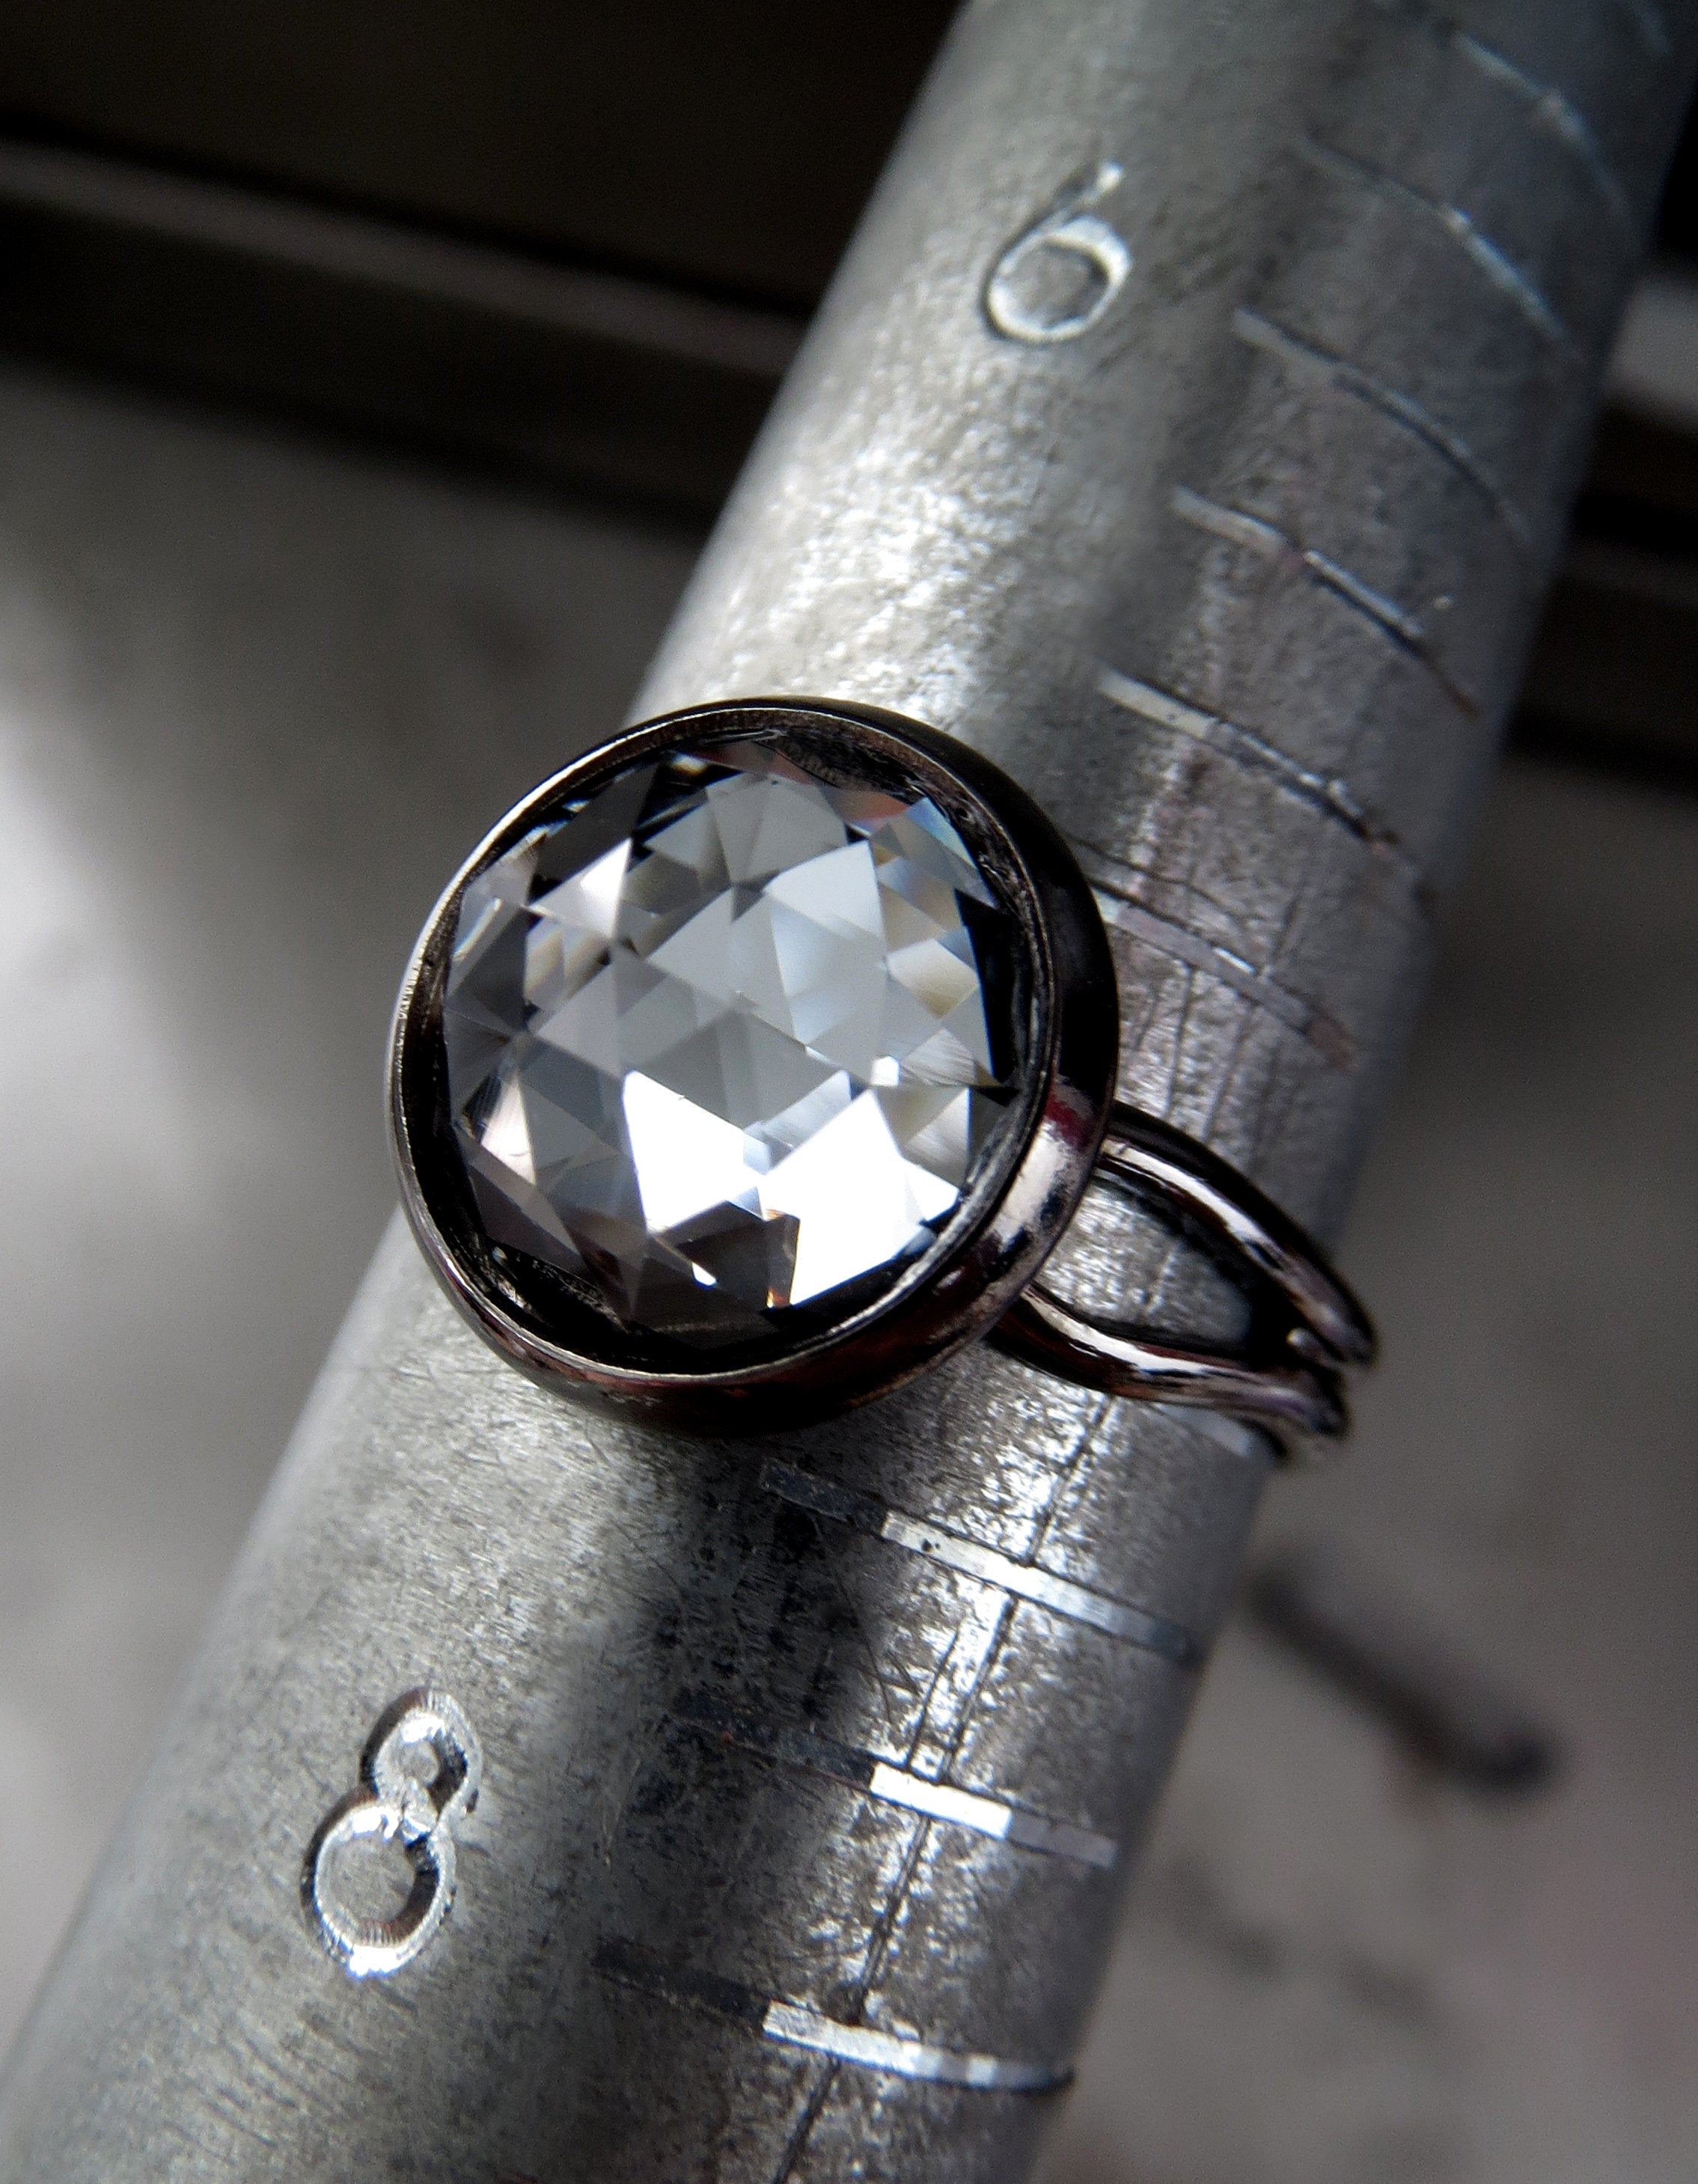 HUSH - Black Night Crystal Ring with Swarovski Crystal, Rare Round Dome Crystal with Black Gunmetal Adjustable Band, Womens Modern Jewelry